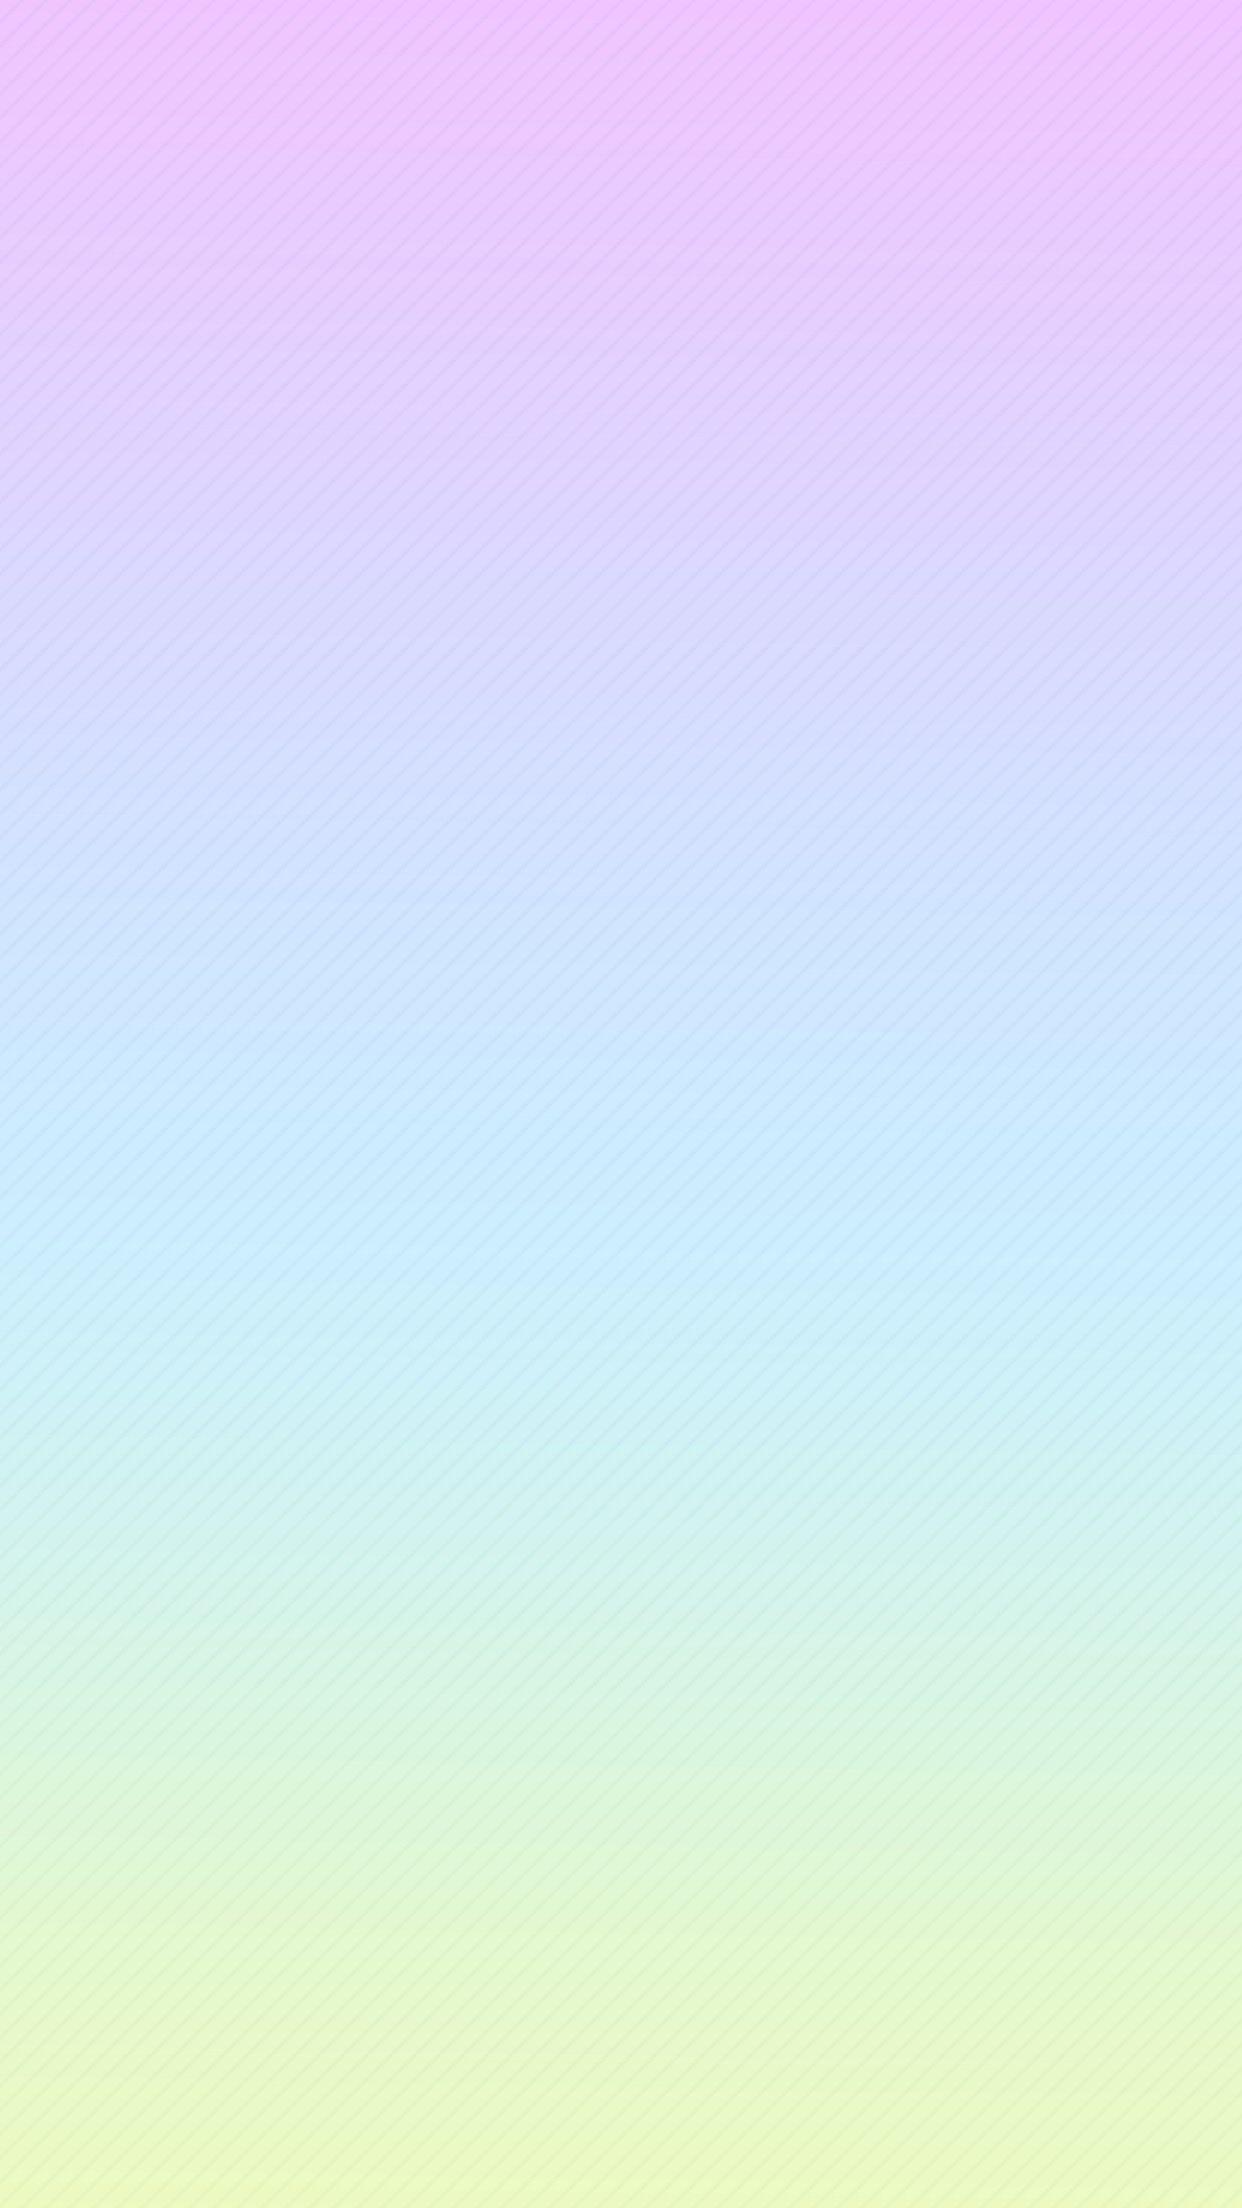 Wallpaper, background, iPhone, Android, HD, pink, blue, purple, green, gradient, ombre. Planos de fundo, Fundos degrade, Fundos de cor sólida